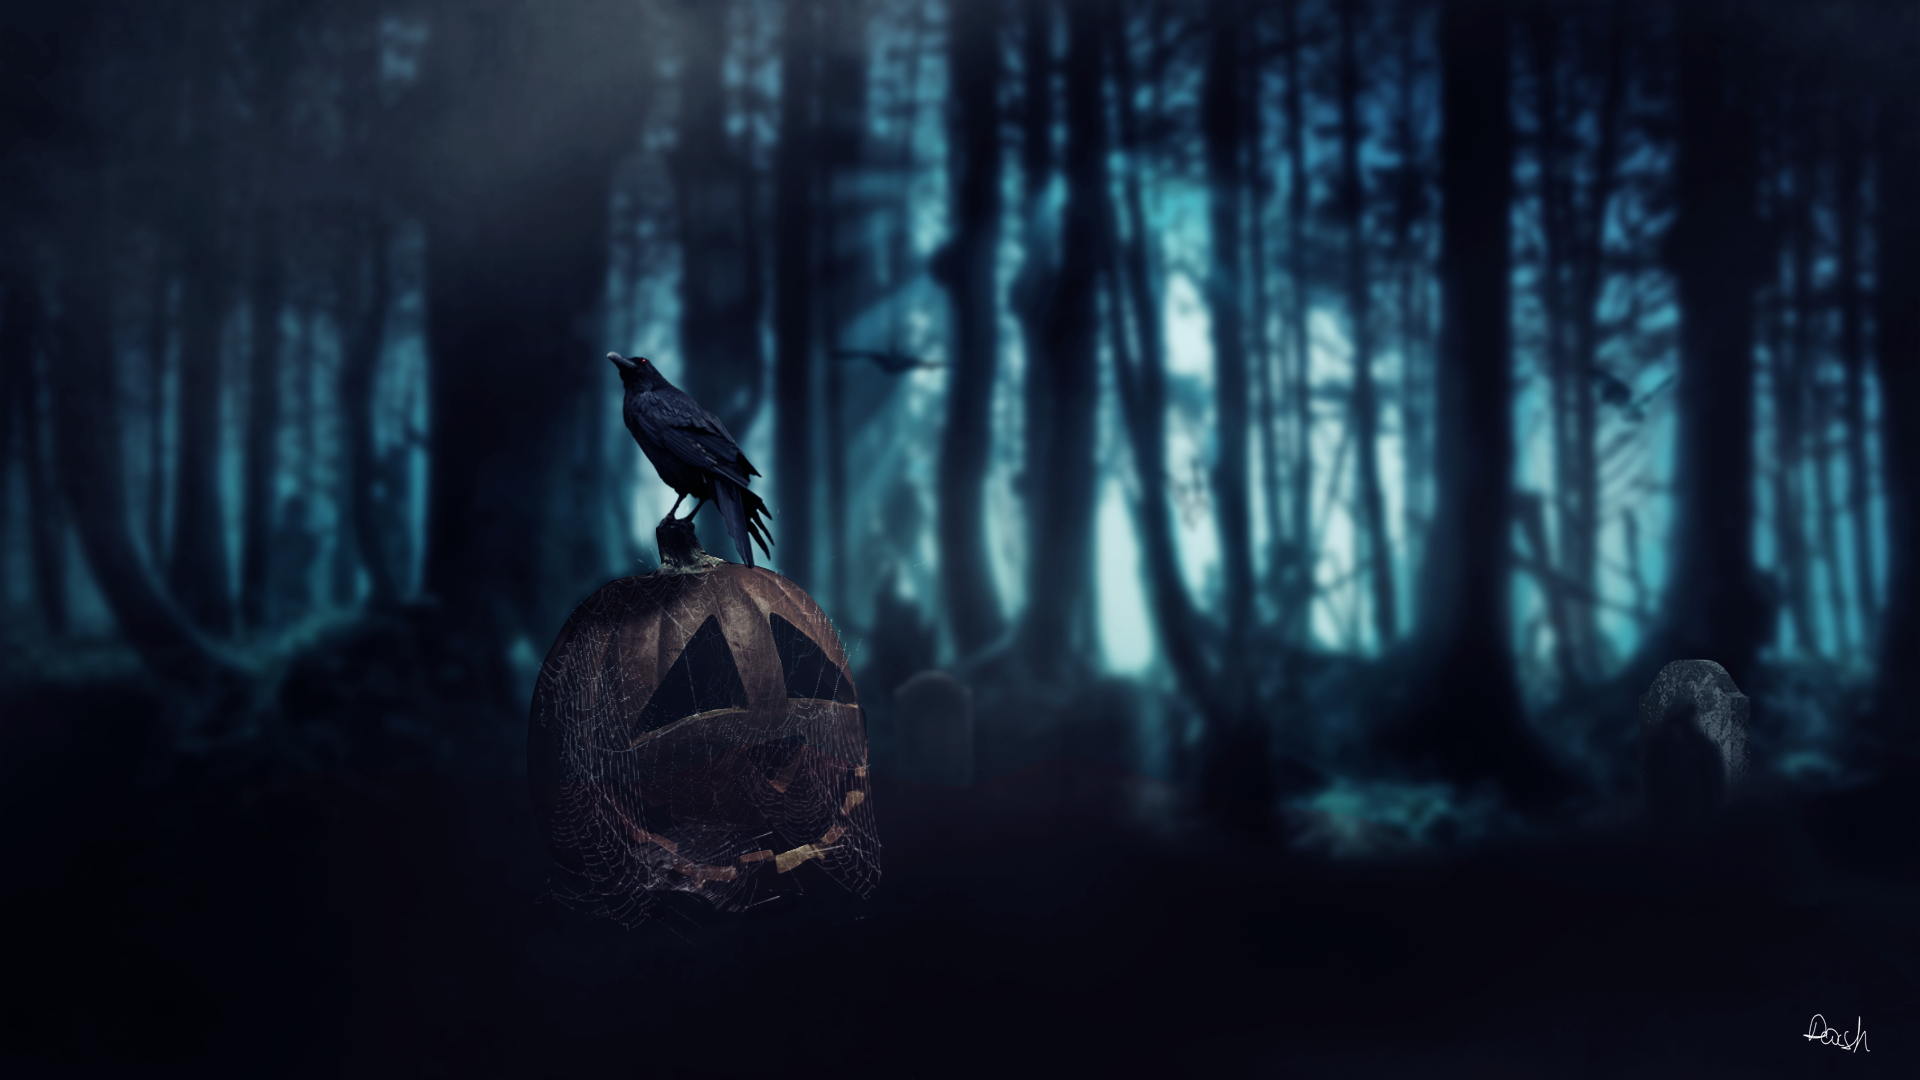 General 1920x1080 Halloween pumpkin Dark Age crow forest spooky birds animals trees